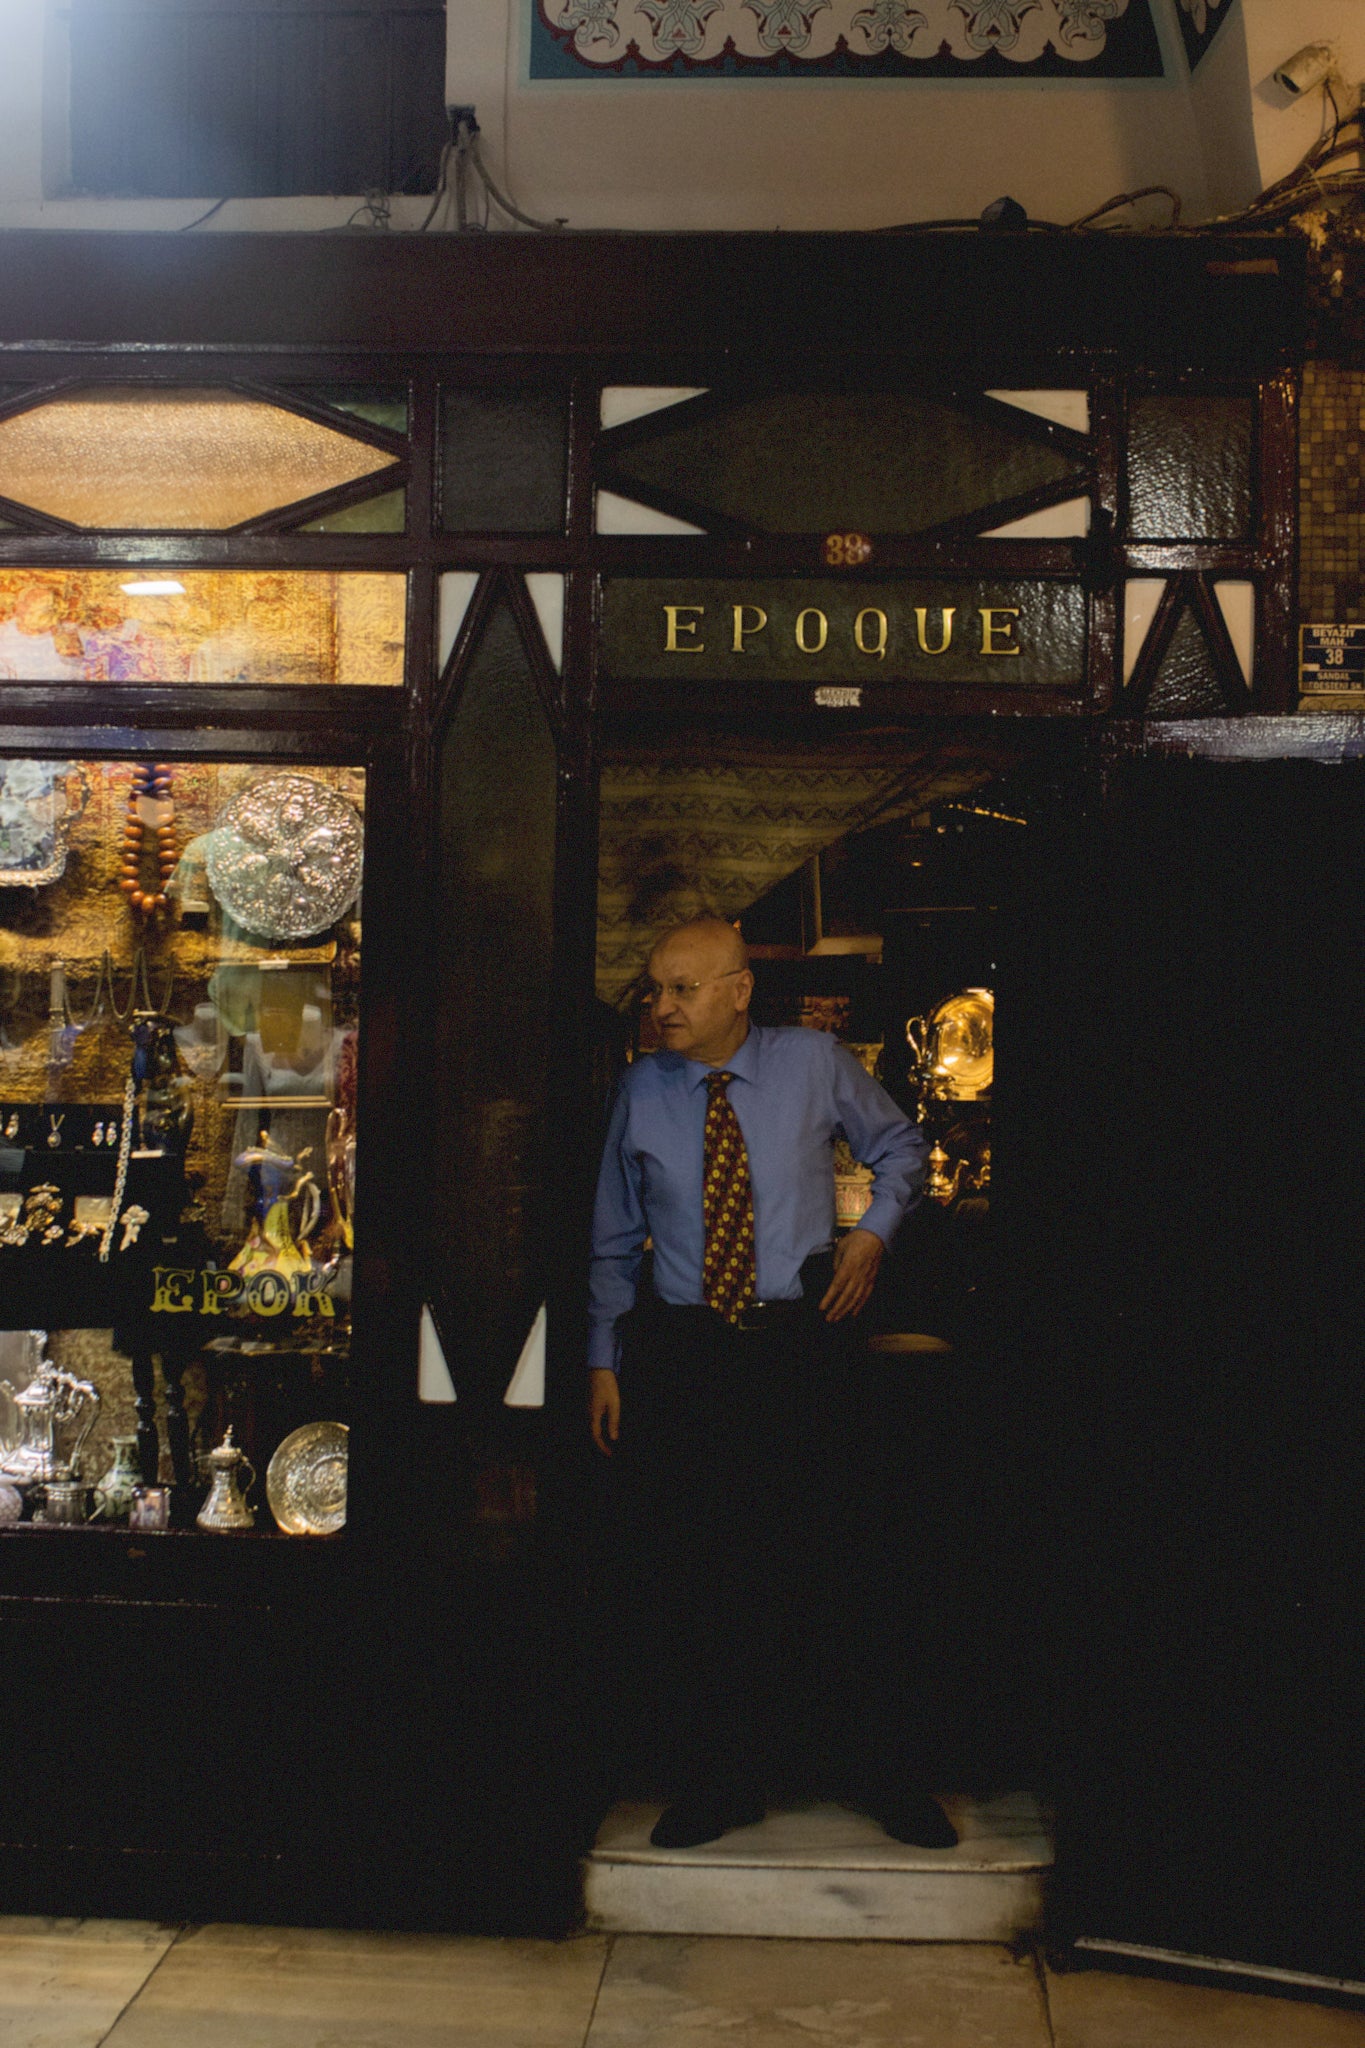 The legendary Epoque storefront.